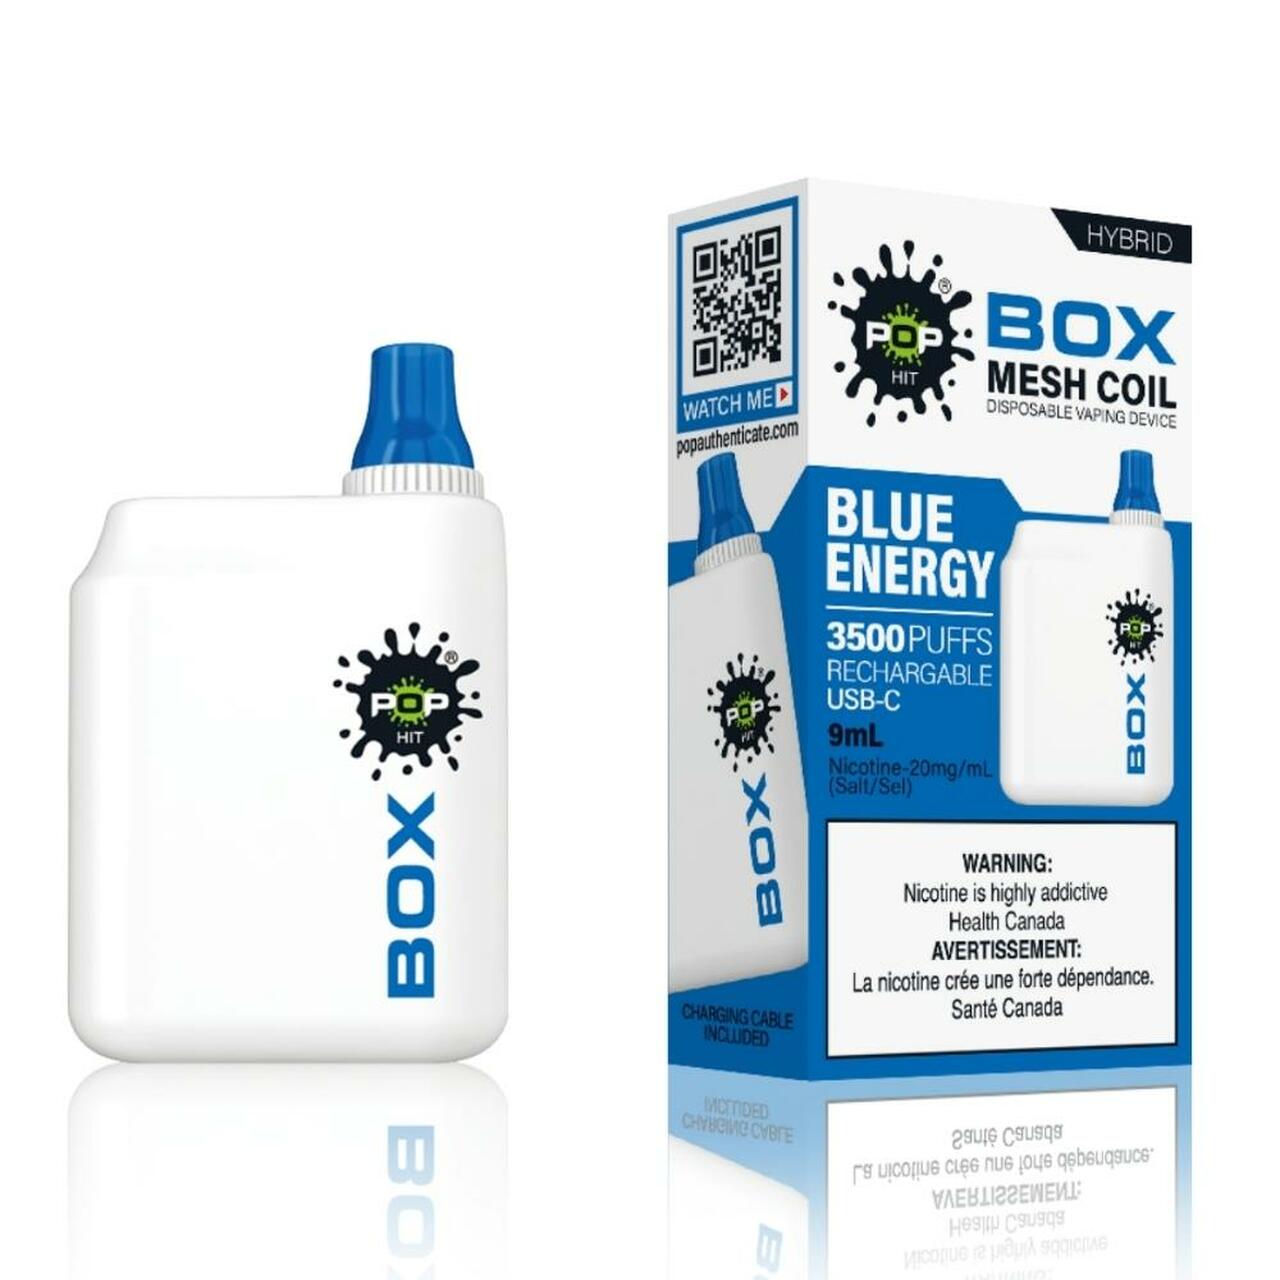 Blue Energy Pop Hybrid Box 3500 Puff Rechargeable Vape Device